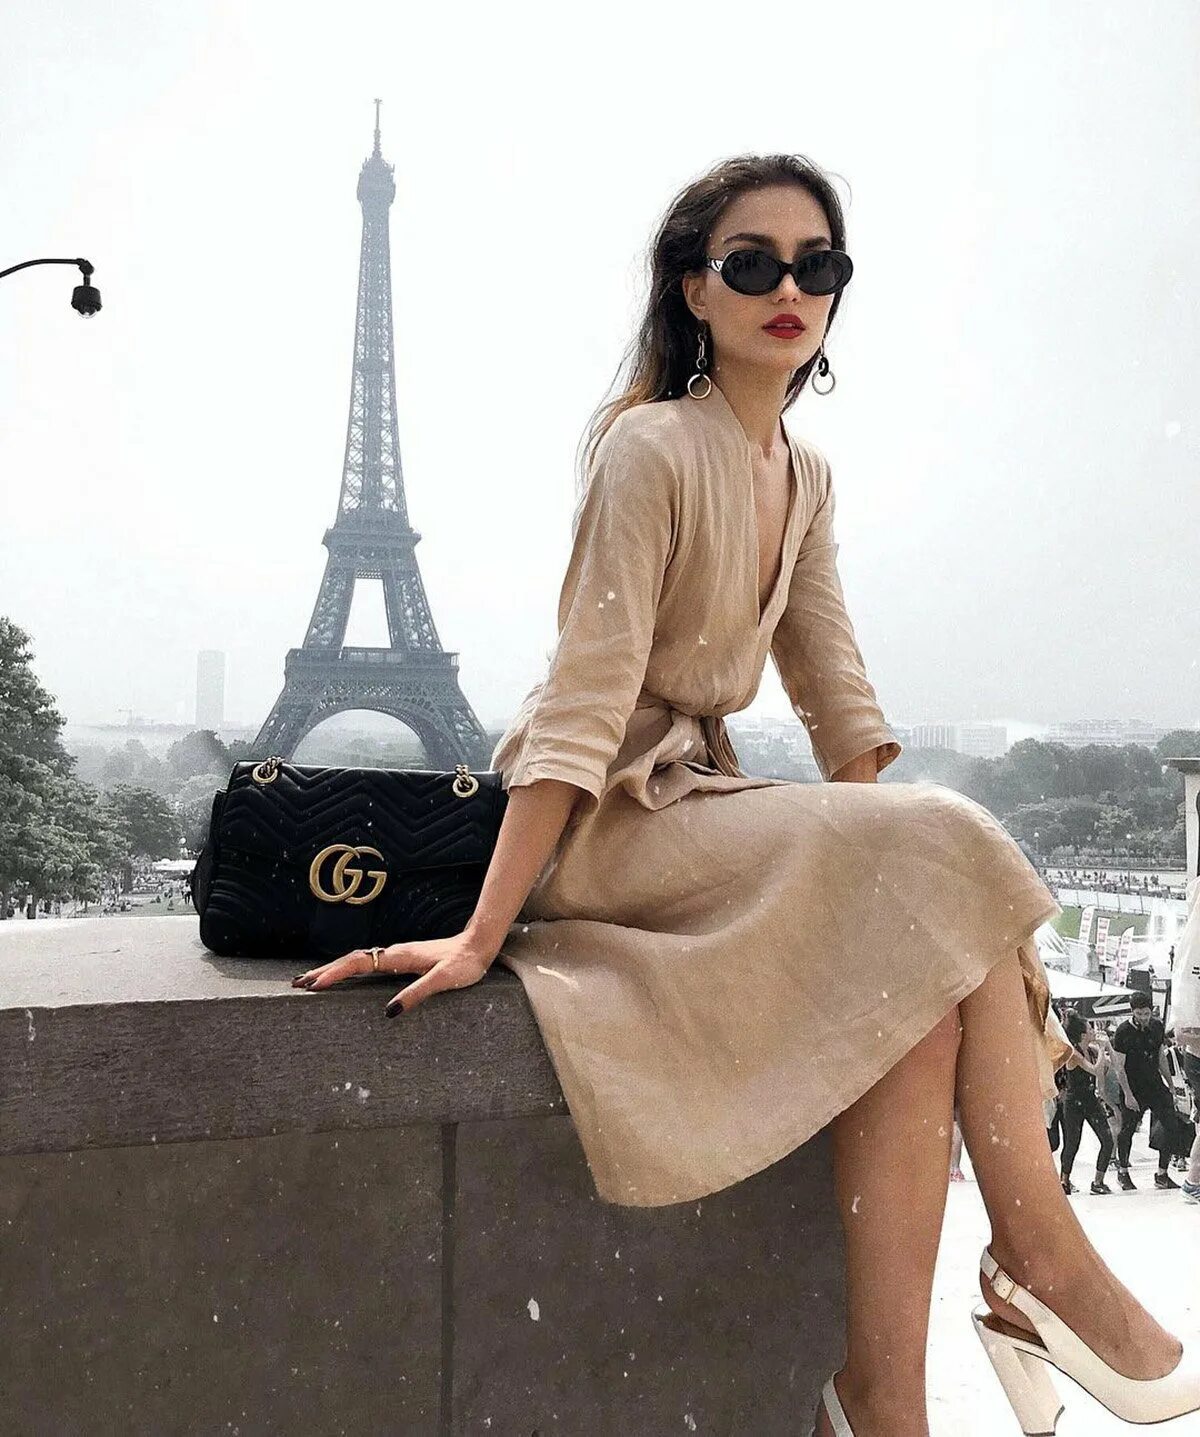 Мода Парижа Франции стиль Парижский Шик. Французский Шик утонченный образ парижанки. Parisian Chic стиль. French ladies